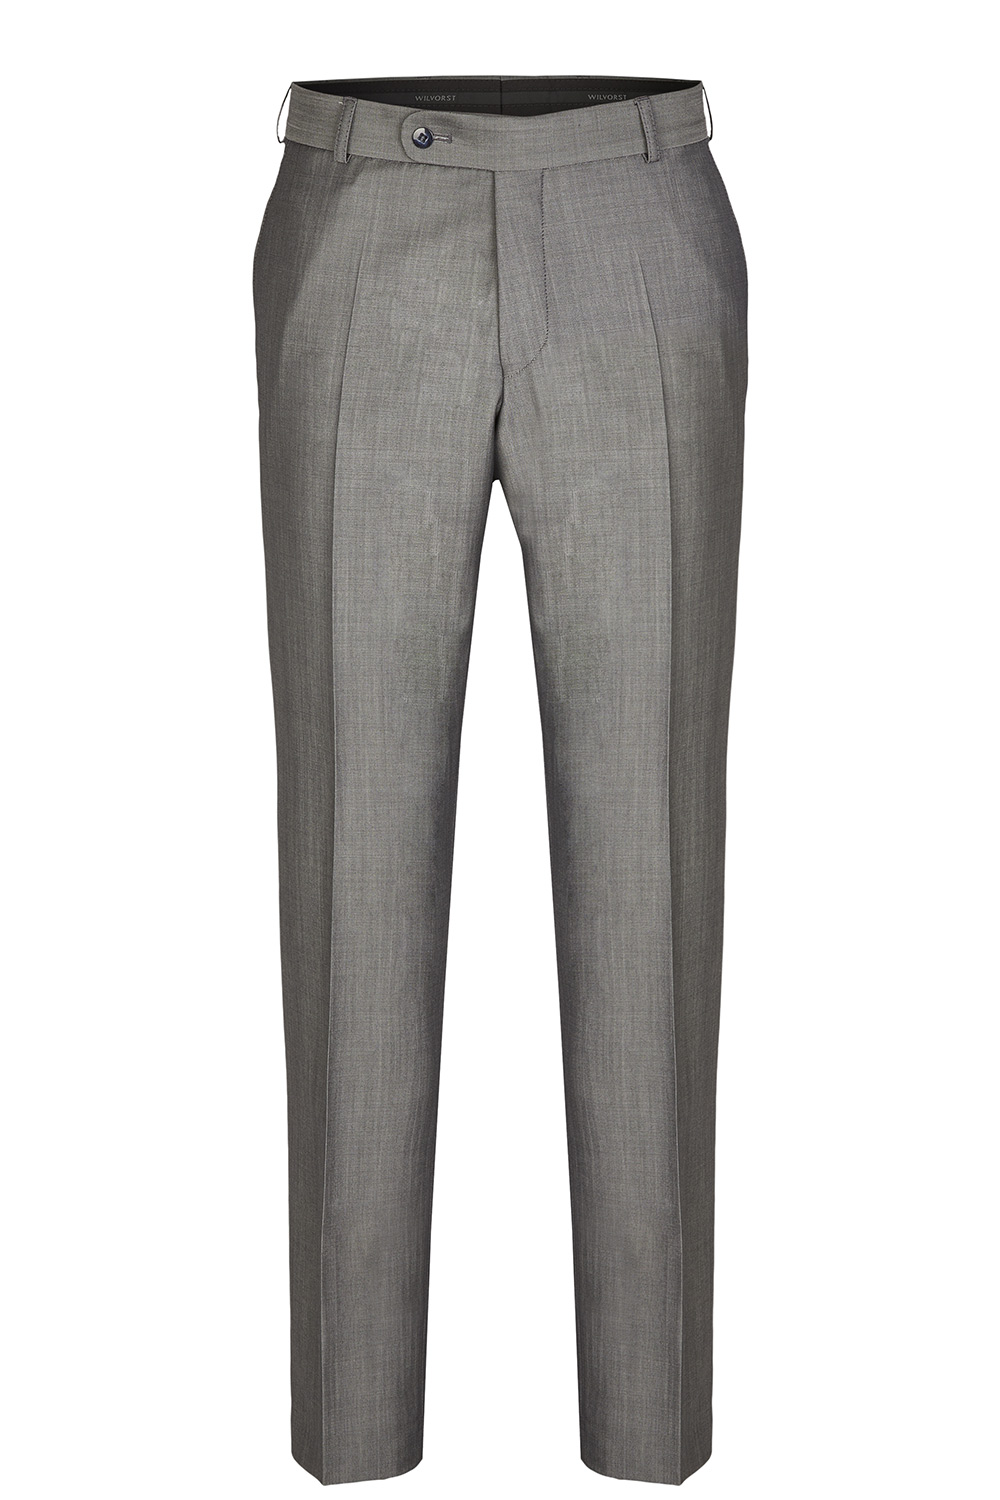 Metallic Grey 3 piece Wedding Suit - Tom Murphy's Formal and Menswear